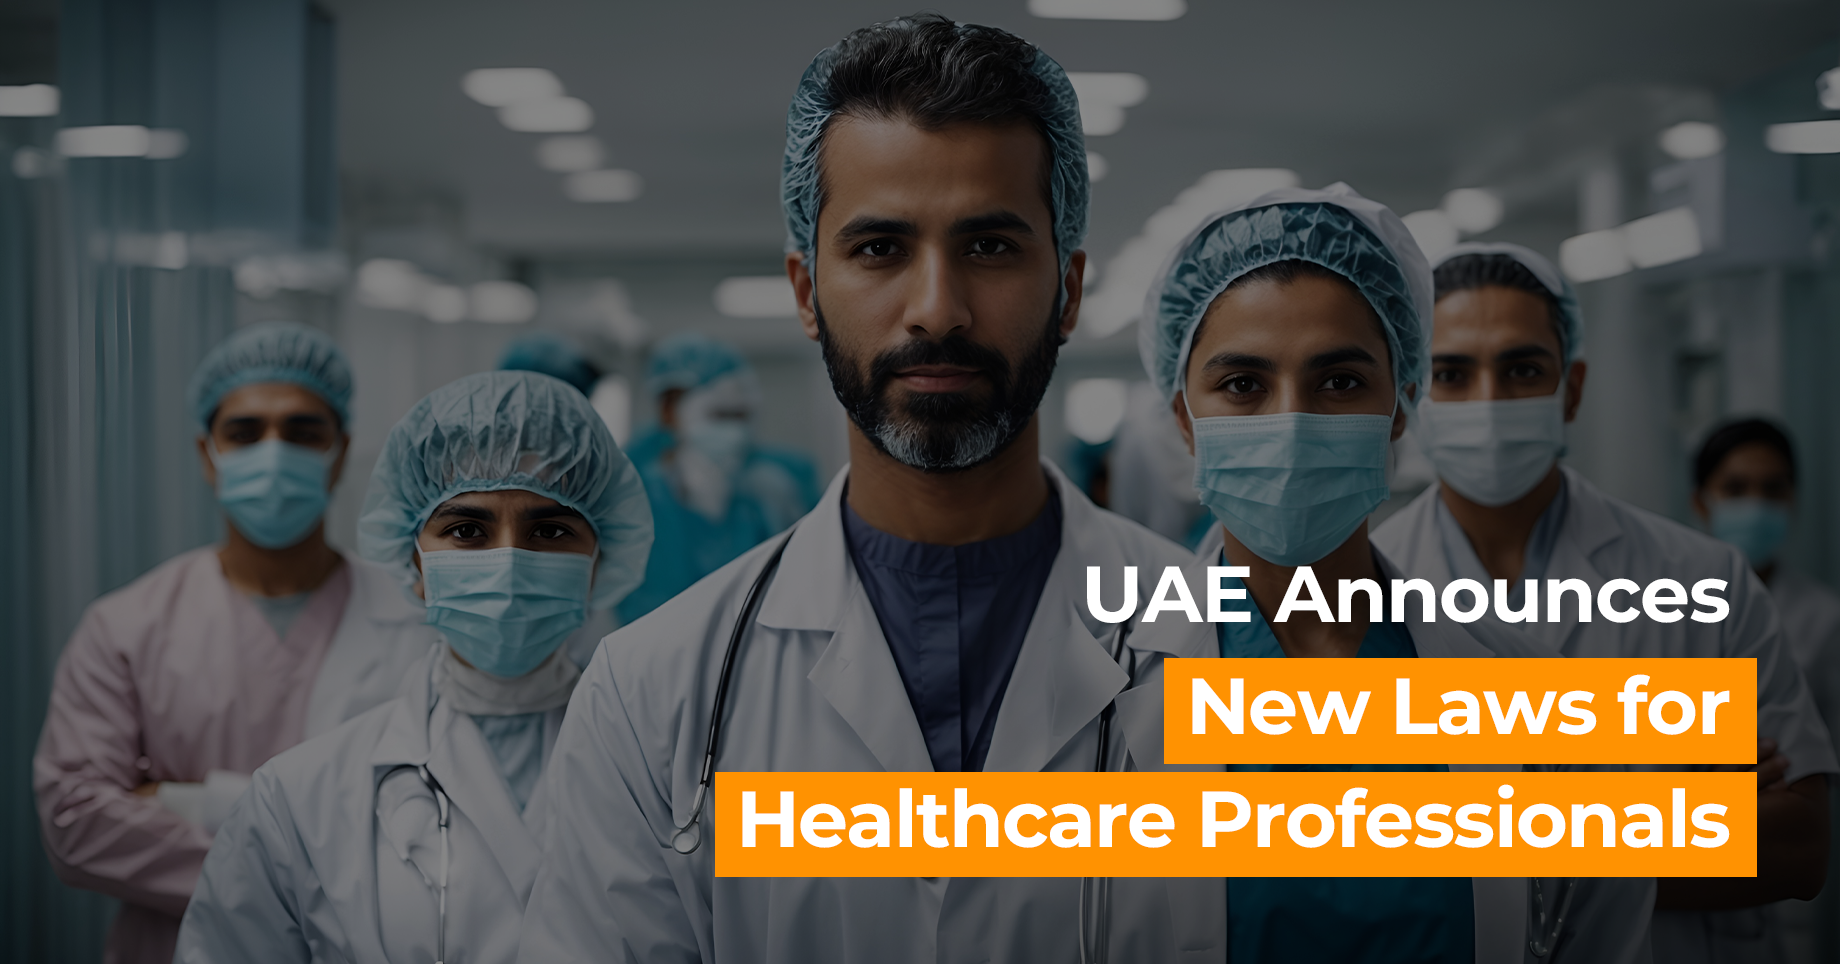 UAE Announces New Laws for Healthcare Professionals